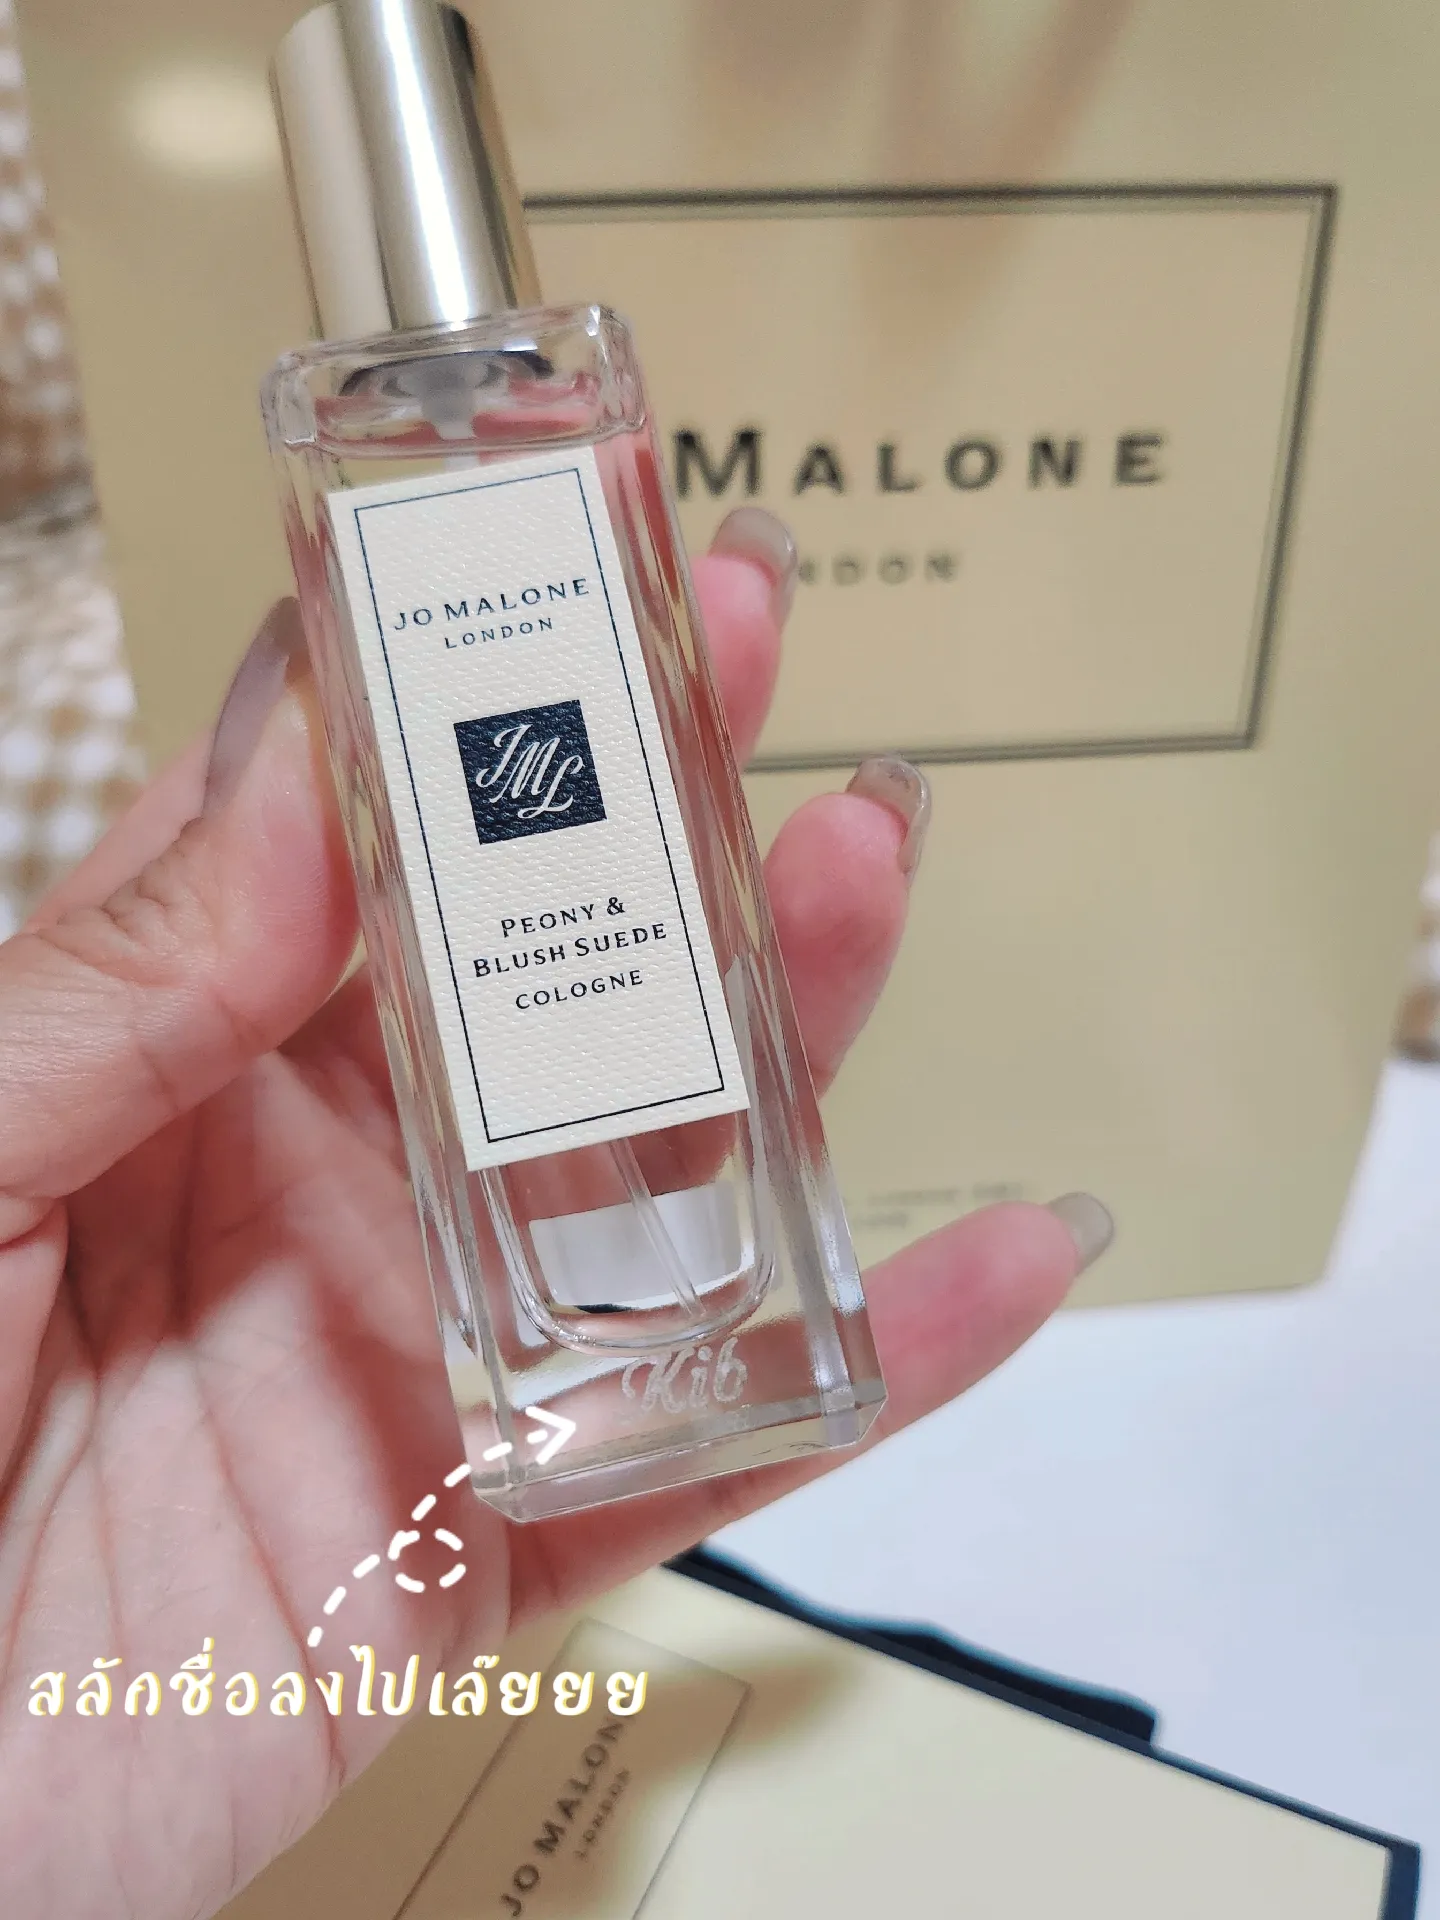 Jo malone brand perfume 🤍🤍, Gallery posted by 🐰Thunpitcha 🐰